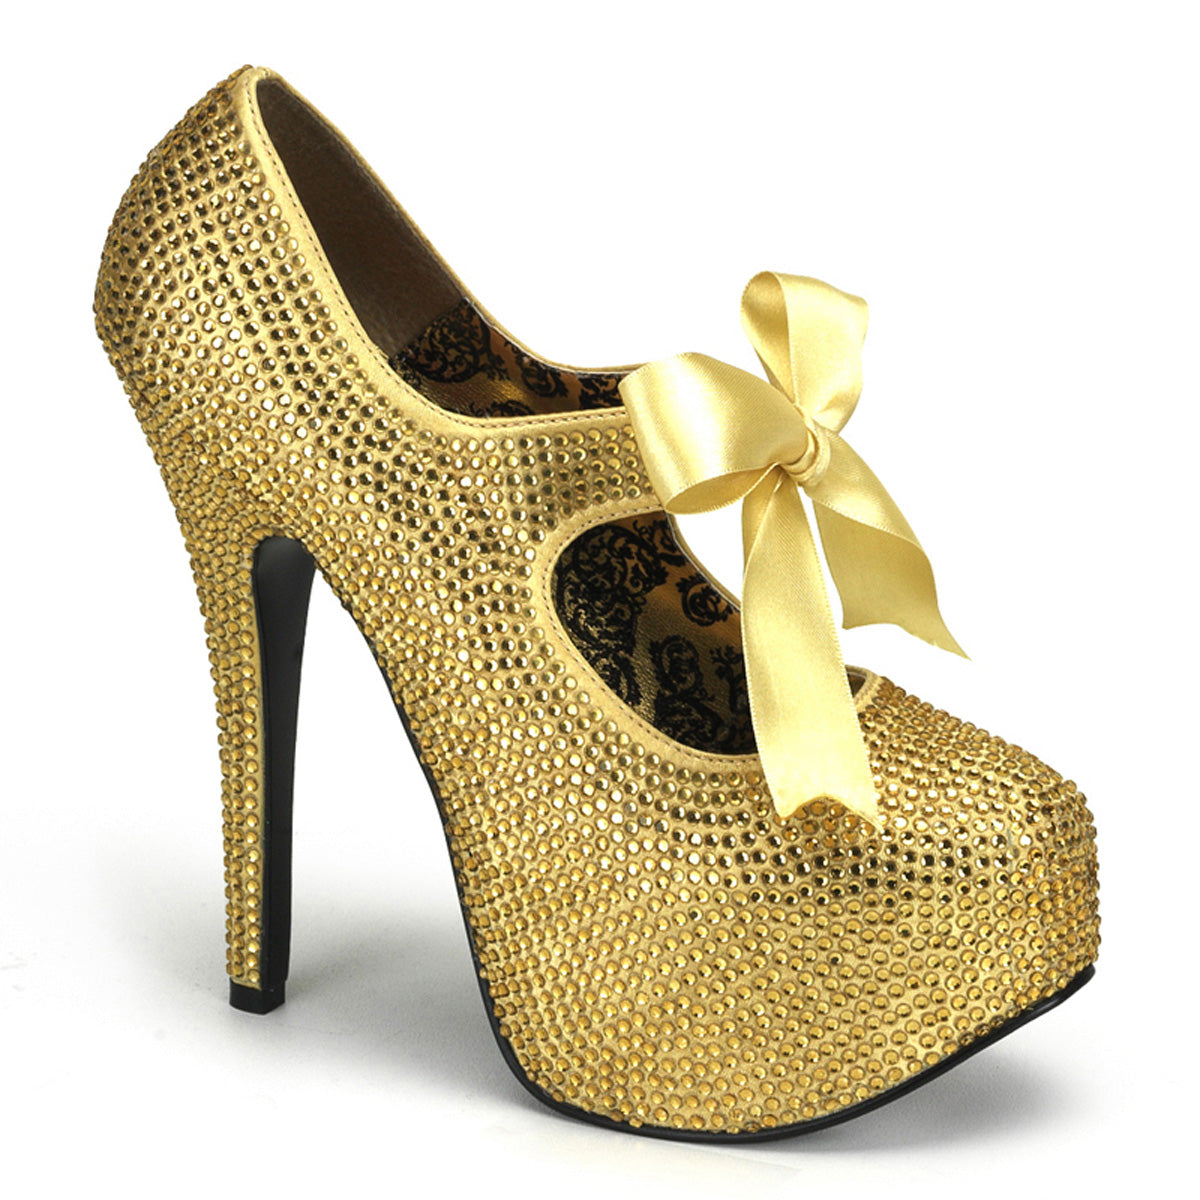 TEEZE-04R Hidden Platform 5.8 Heel Gold Rhinestone Sexy Shoe